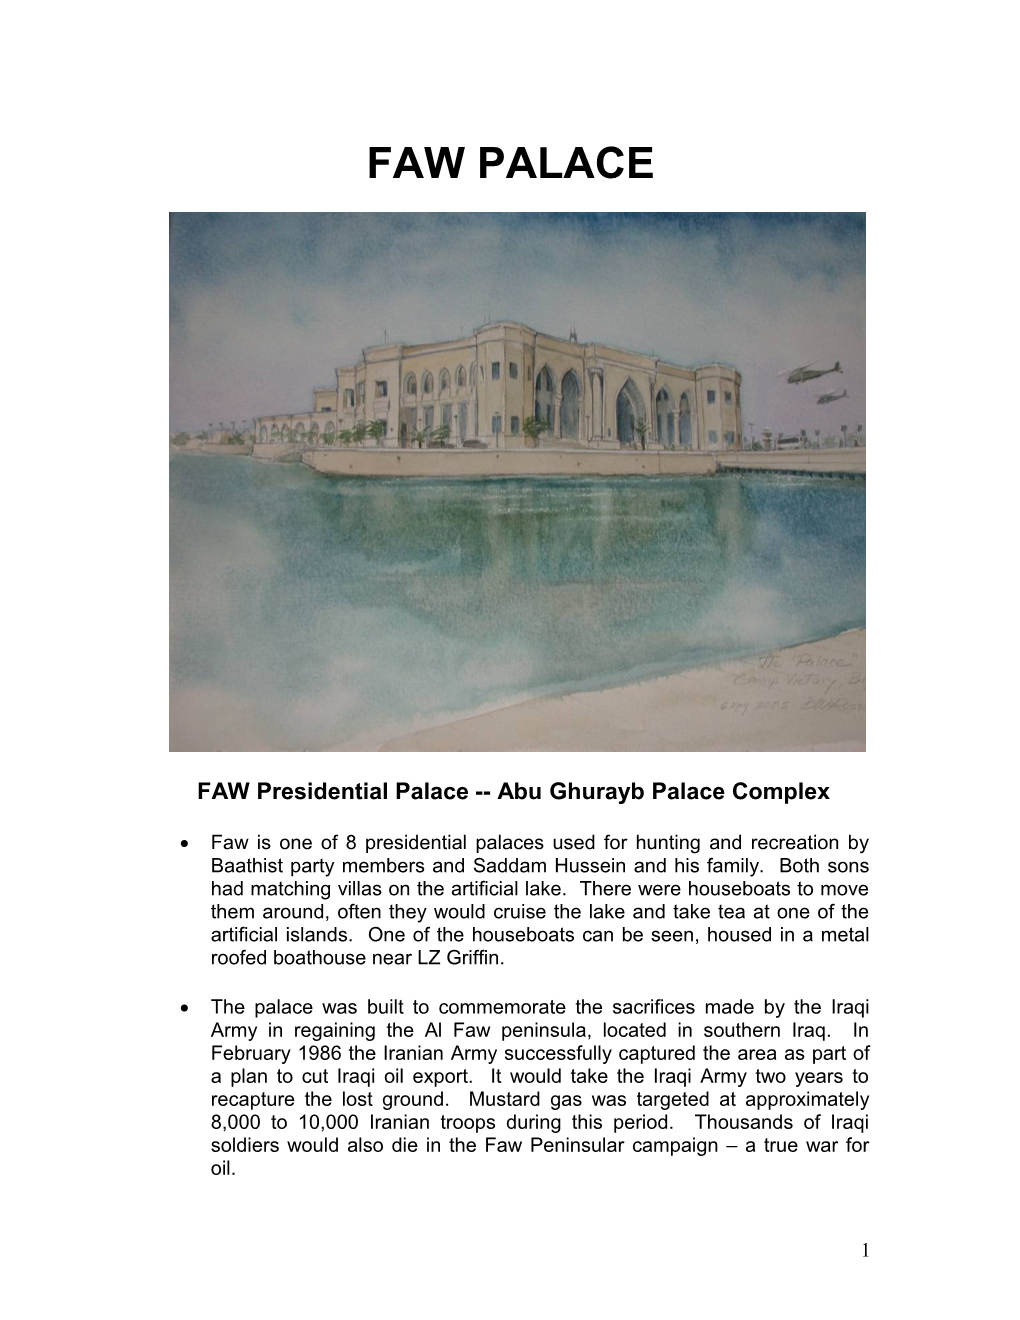 Al Faw Presidential Palace - Abu Ghurayb Presidential Palace Complex